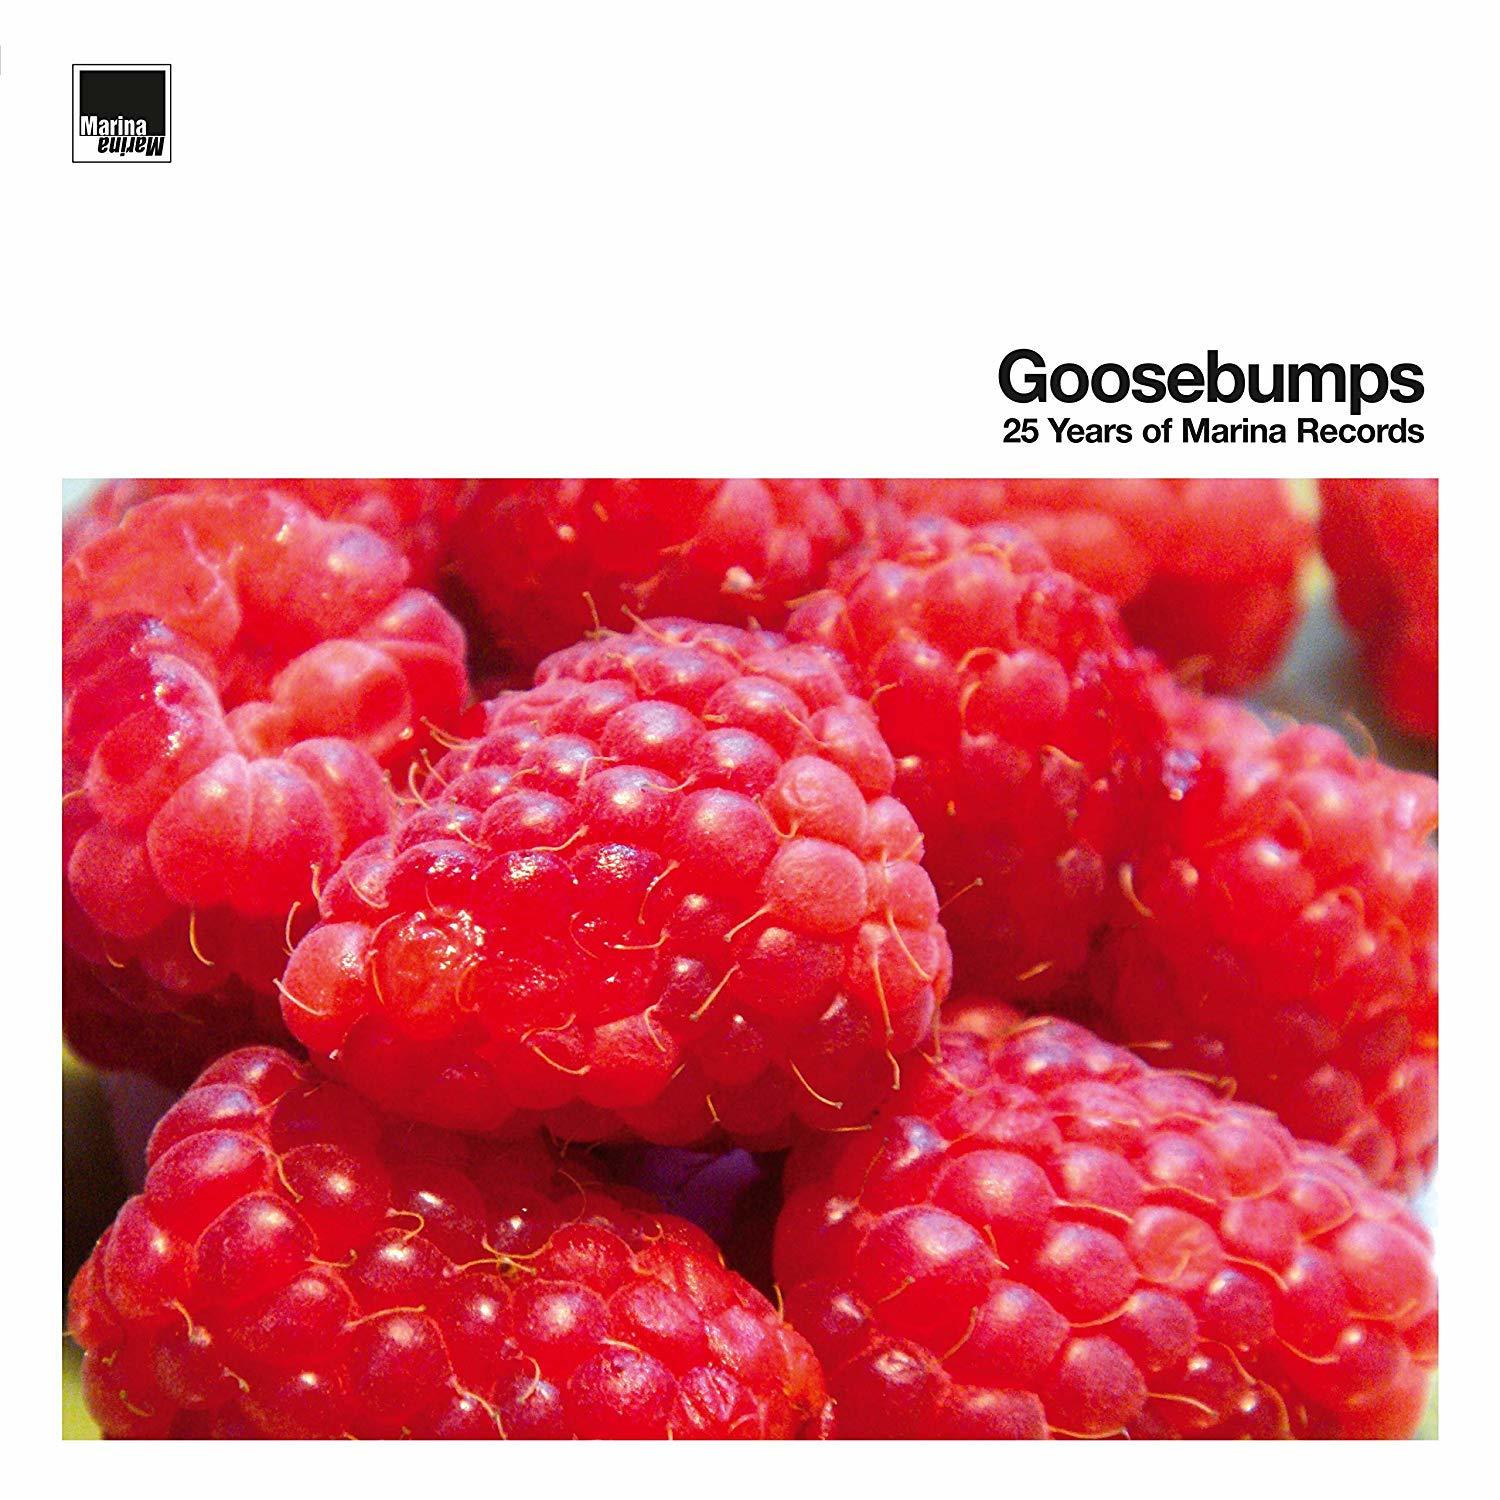 VARIOUS - Goosebumps-25 - (CD) Years Of Records Marina